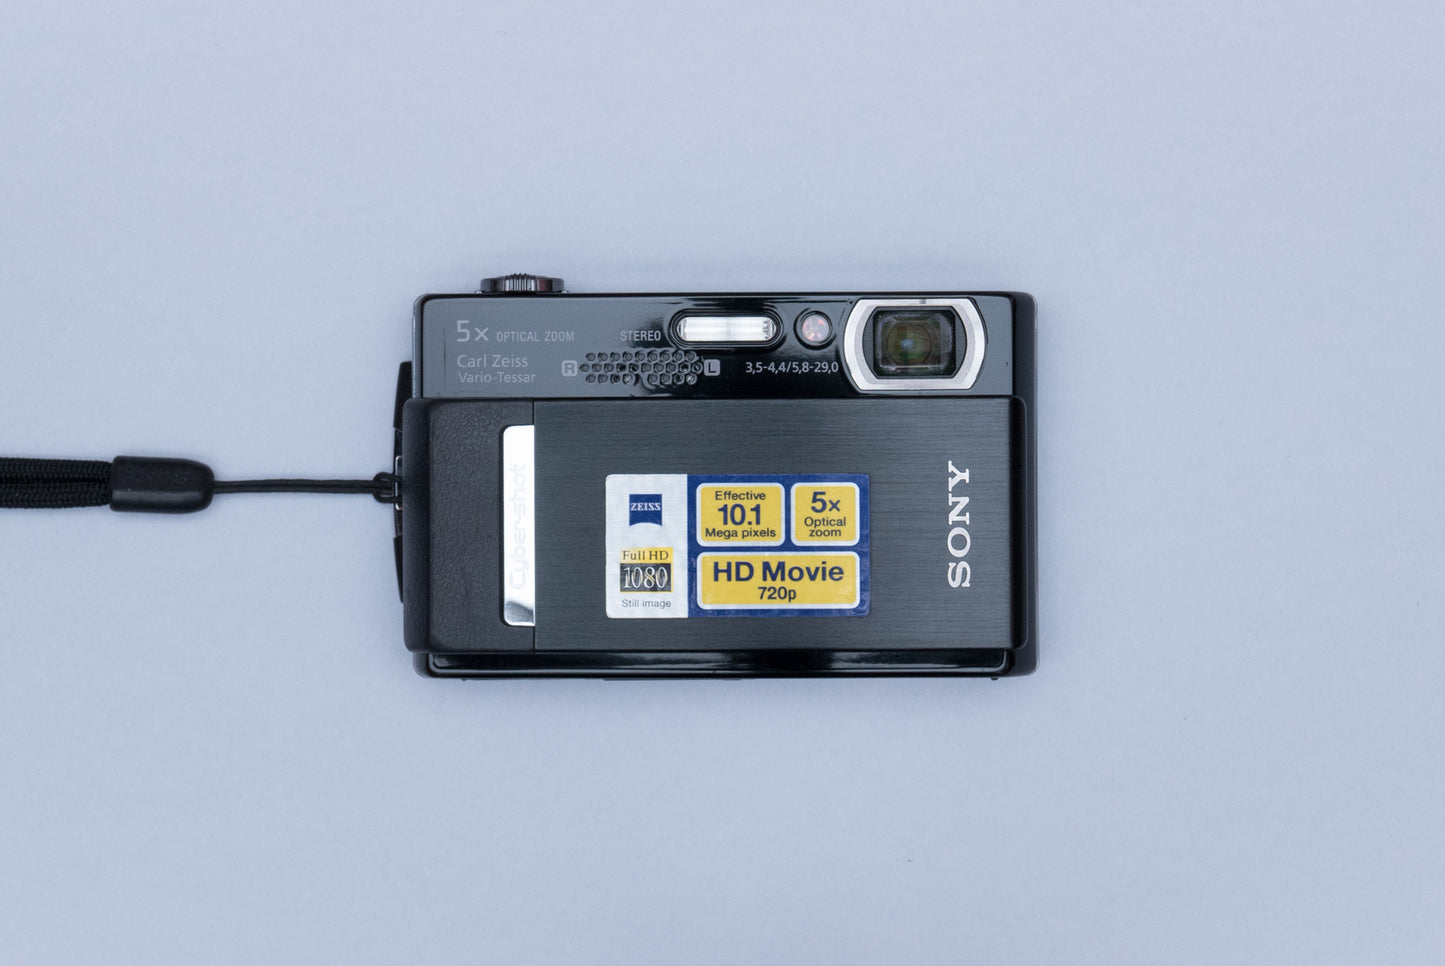 Sony Cyber-Shot DSC-T500 Compact Digital Camera